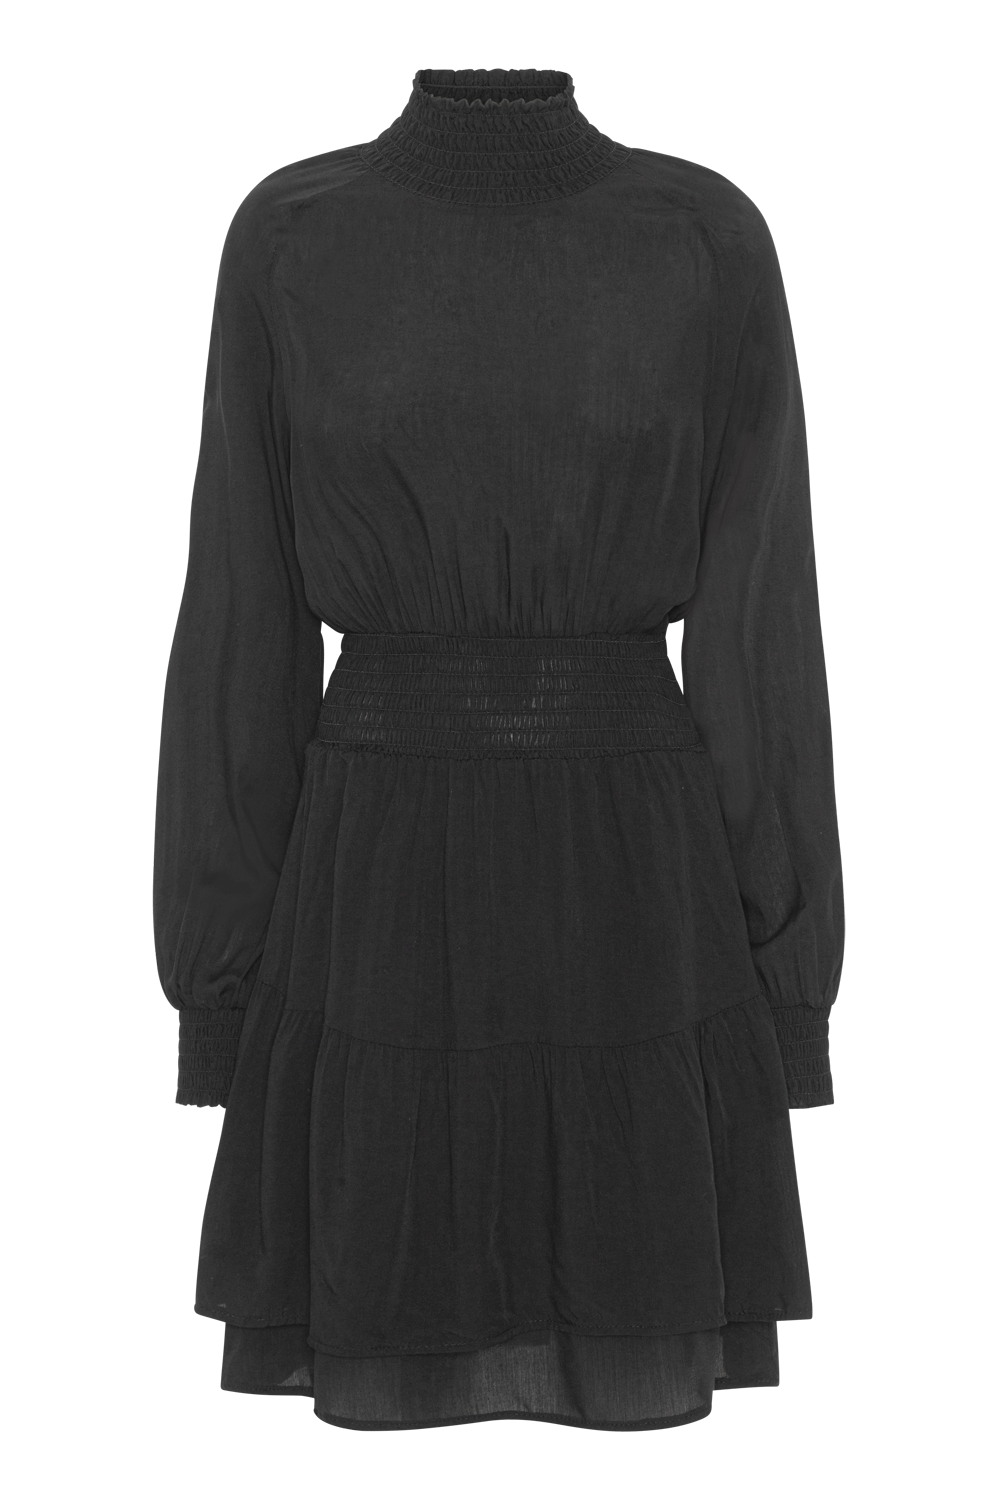 Daniella High Neck Dress Short Black Solid